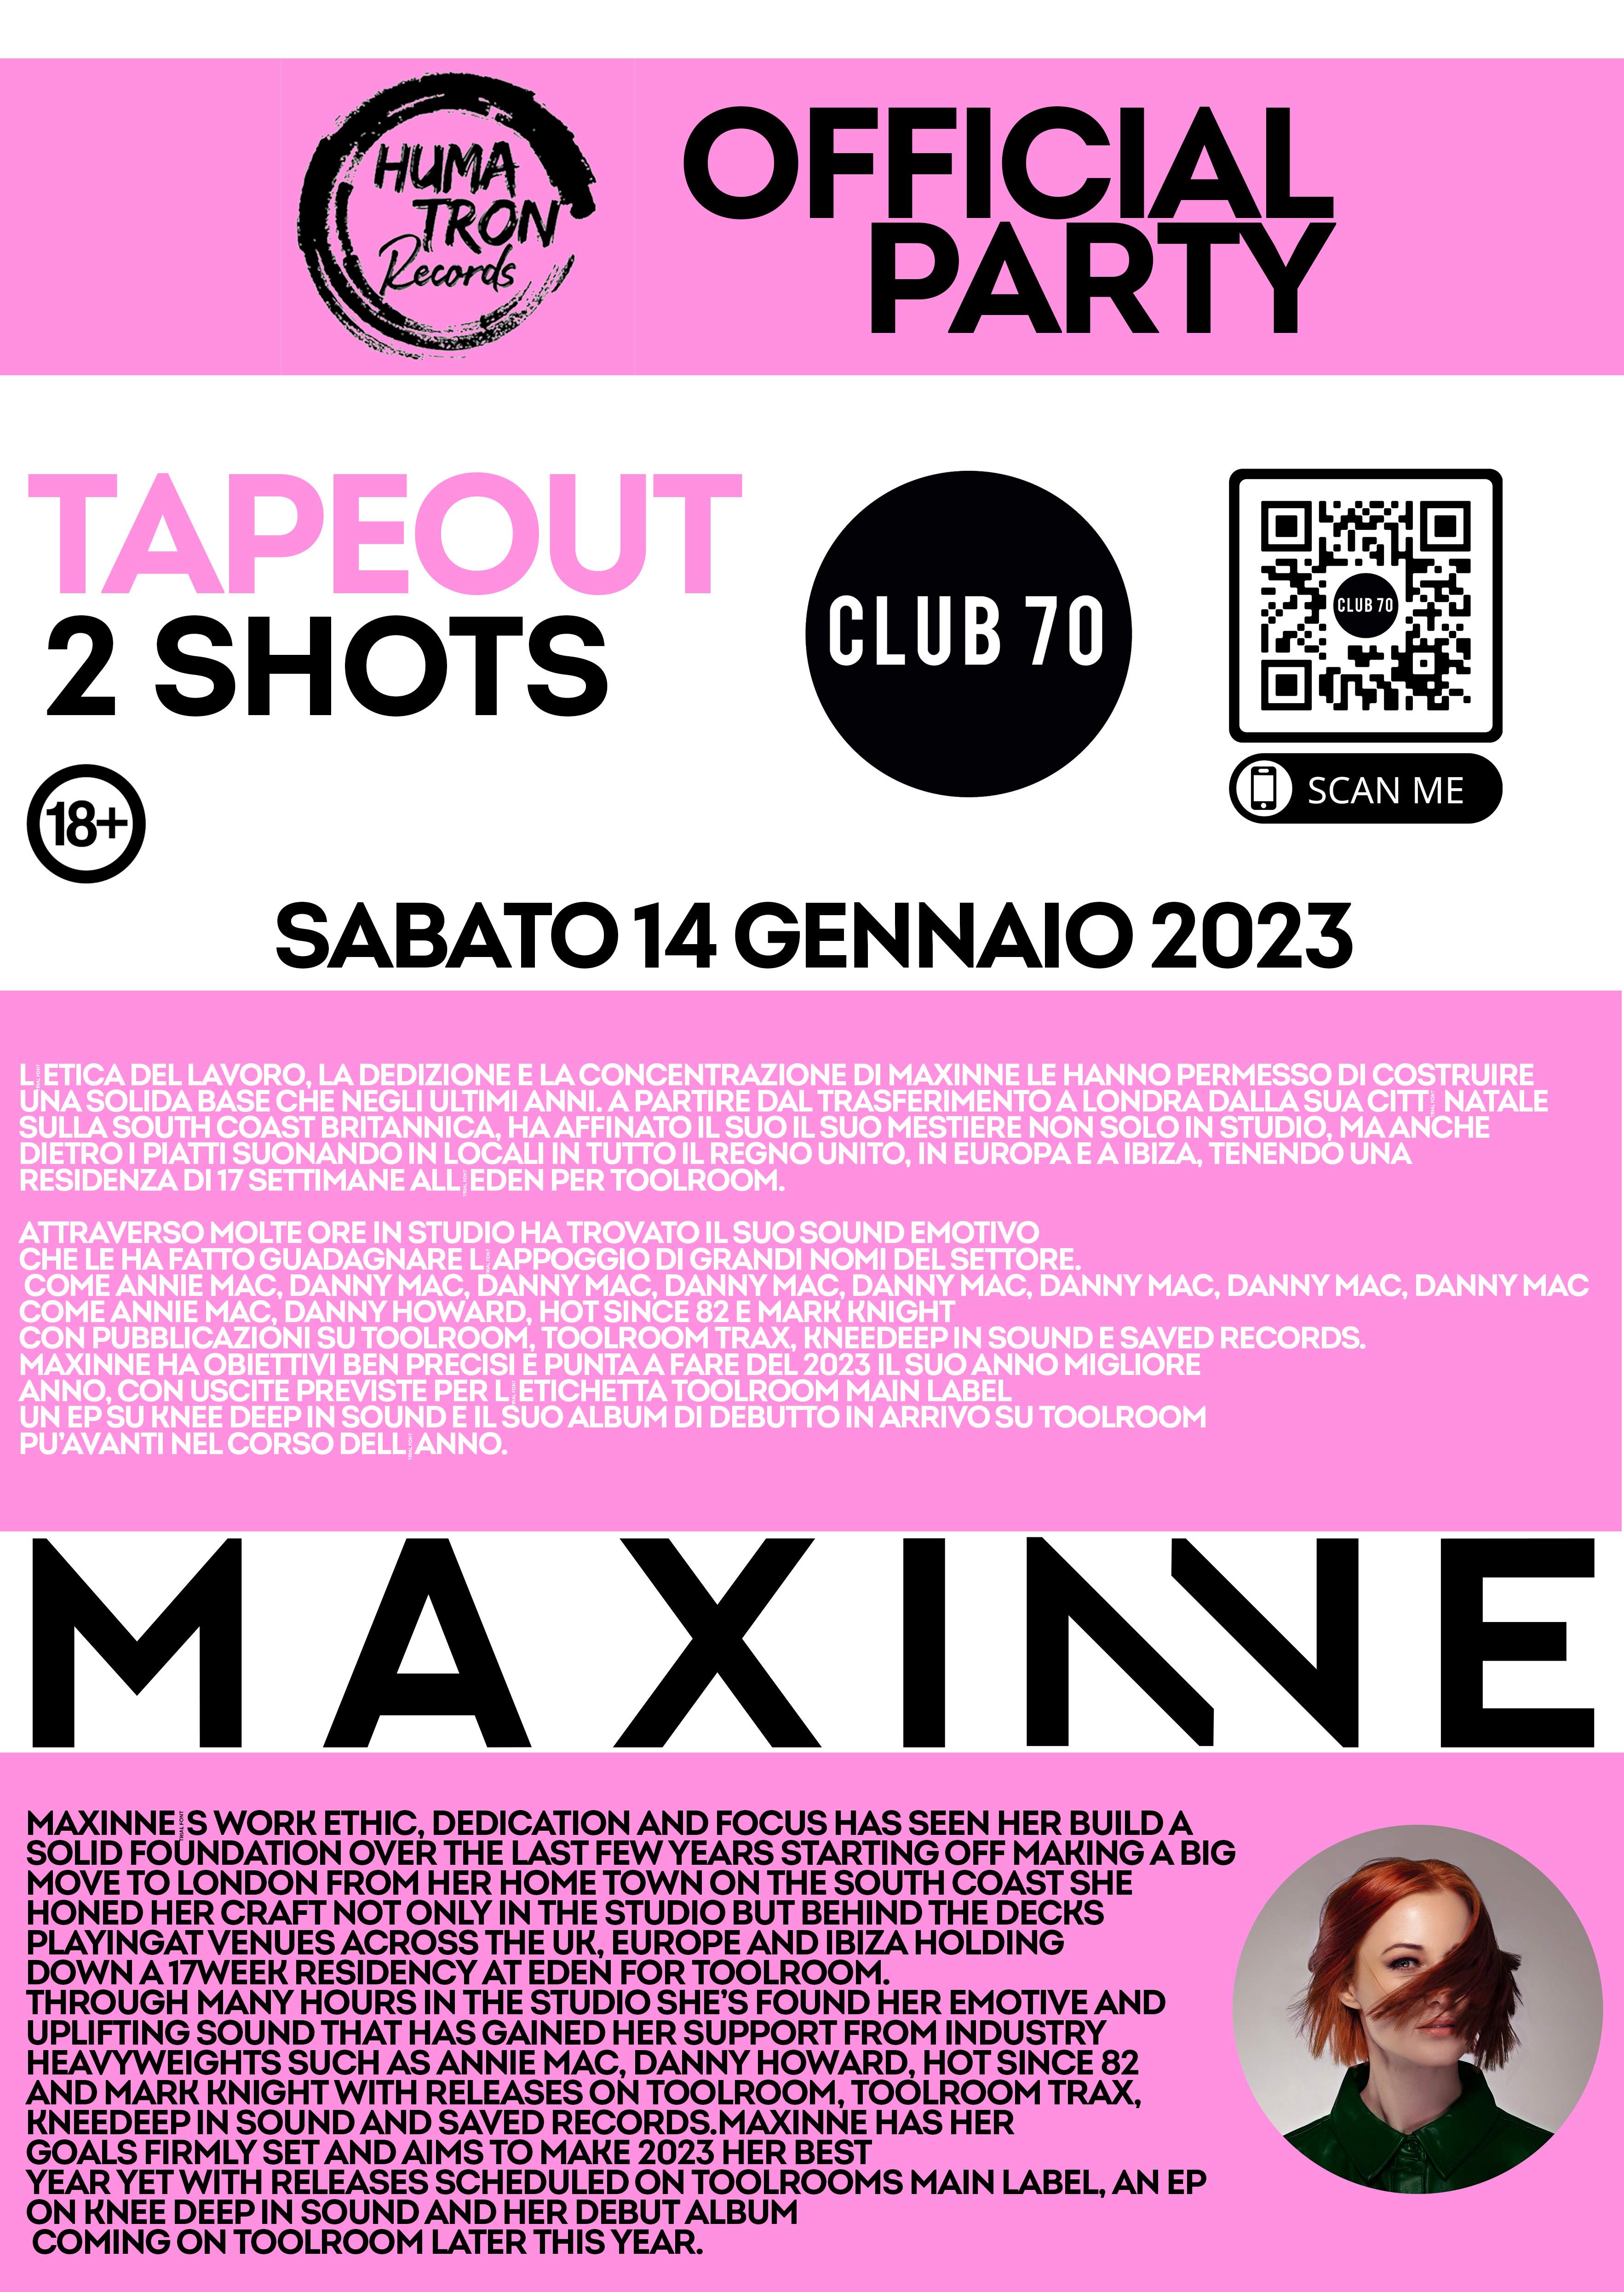 SATURNALIA Club70 - ANNOII 2023 - HUMATRON OFFICIAL PARTY - Página trasera